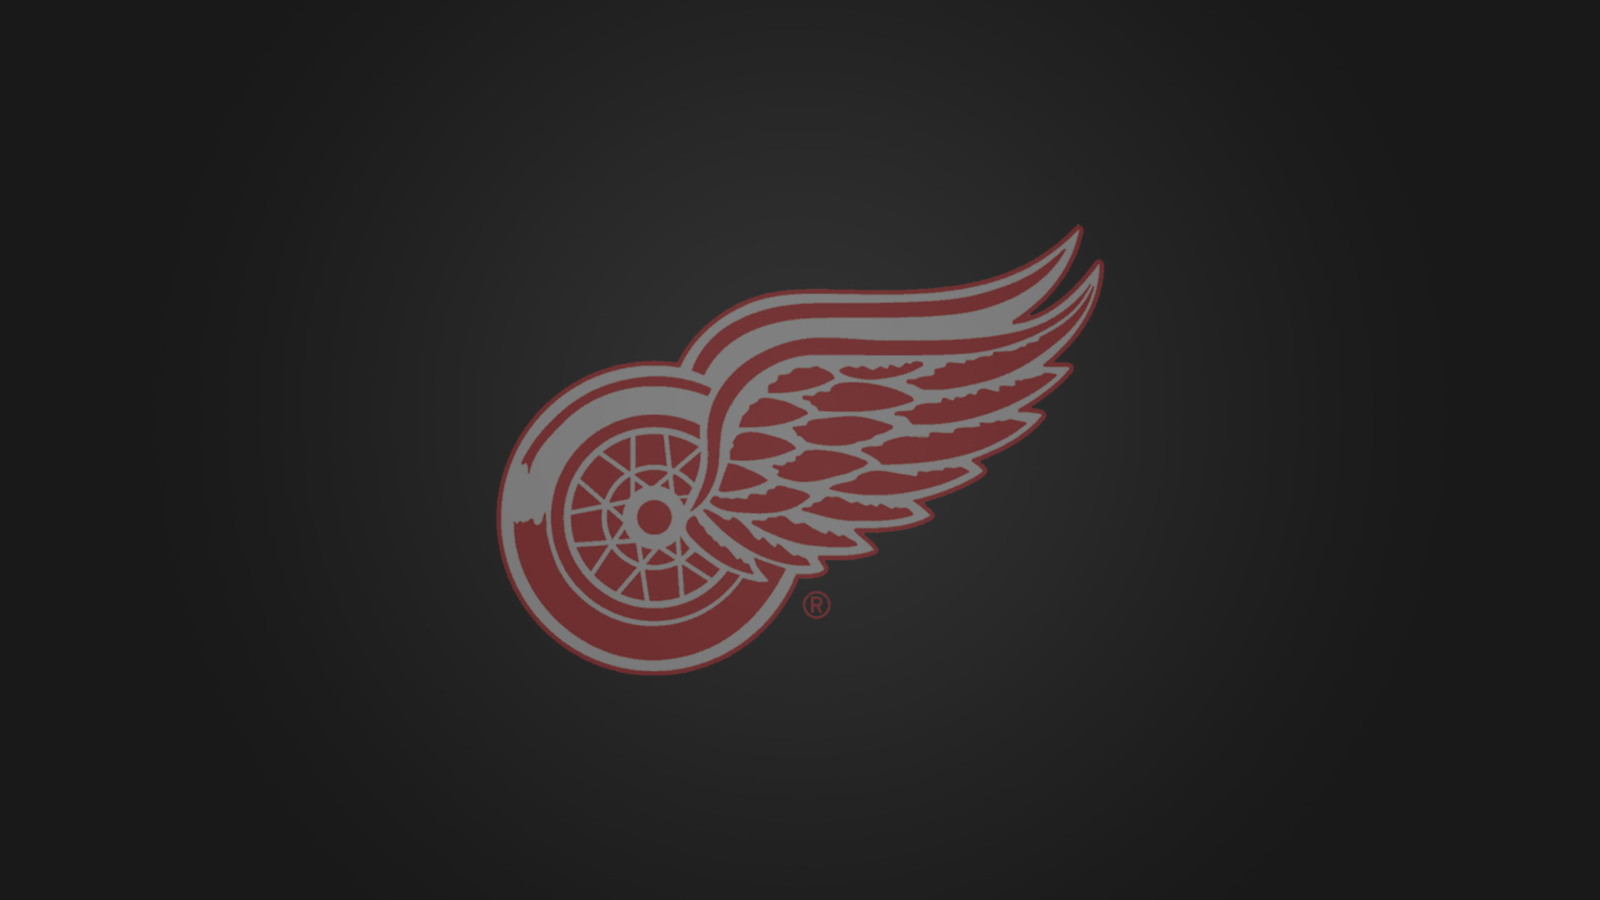 Detroit Red Wings wallpaper 1600x900